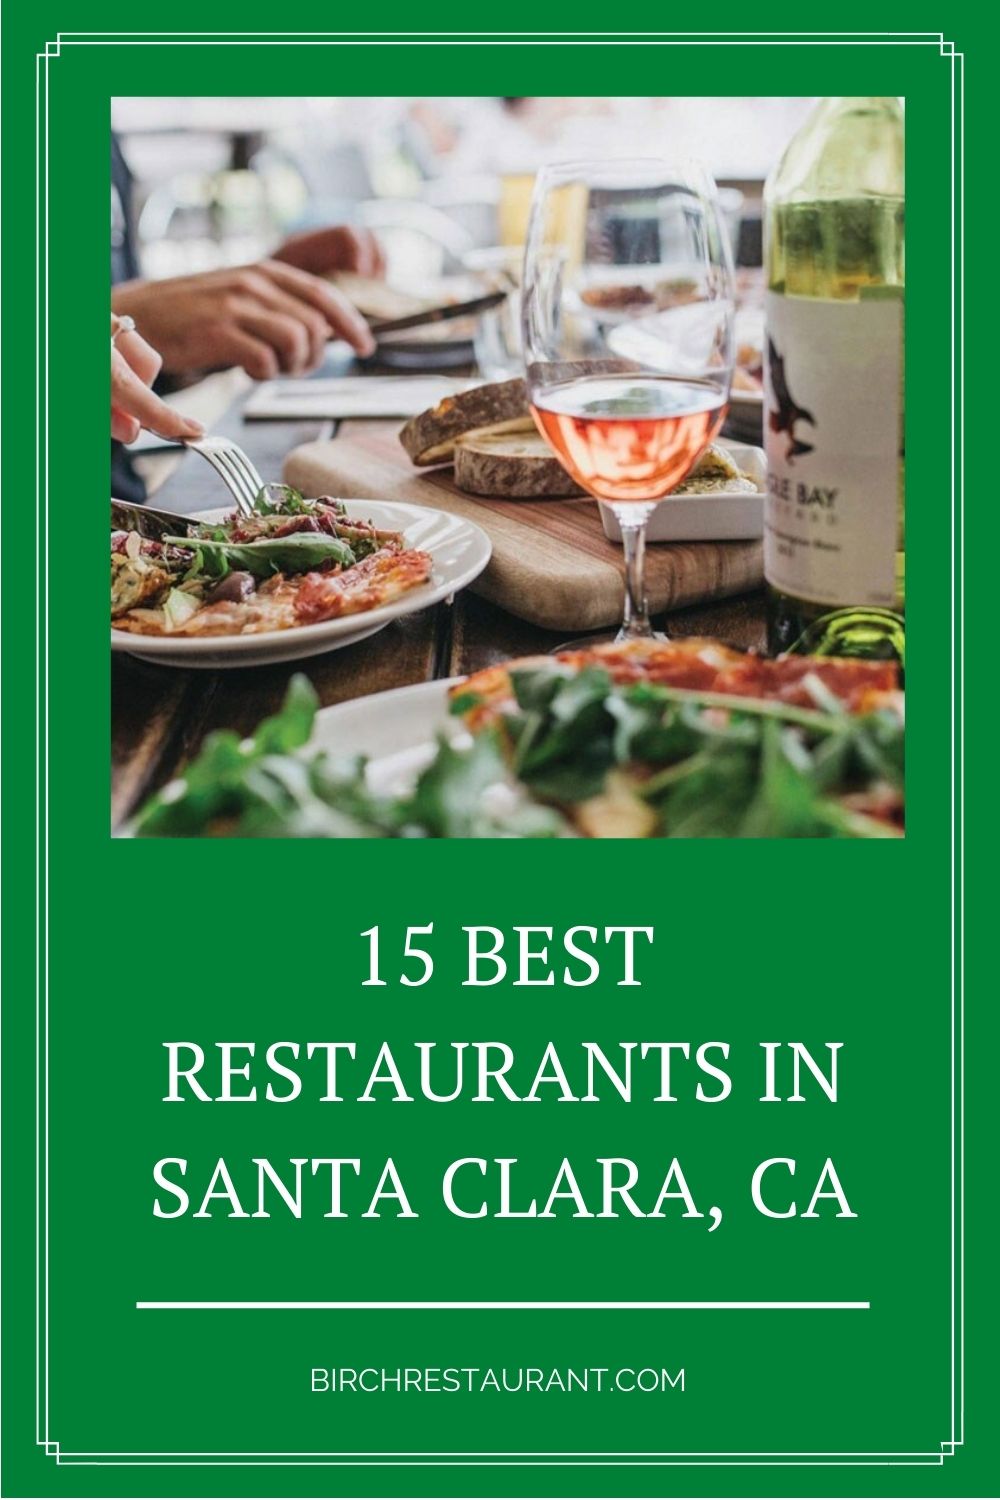 Best Restaurants in Santa Clara